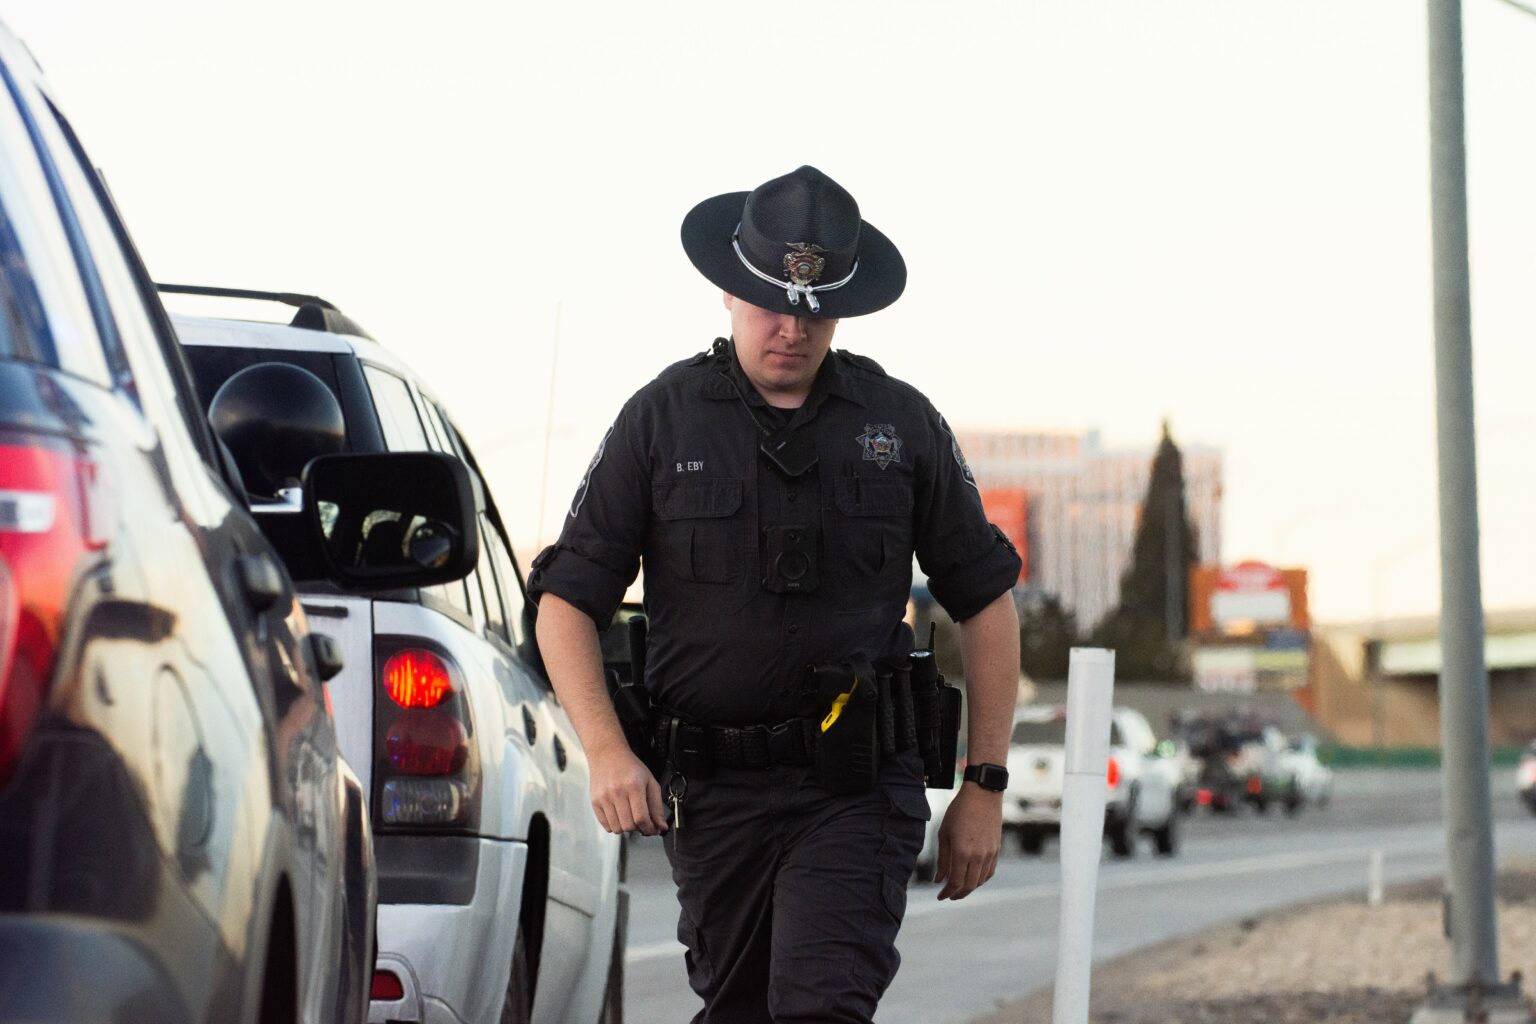 Sheriff's KKK Costume Photo Goes Viral